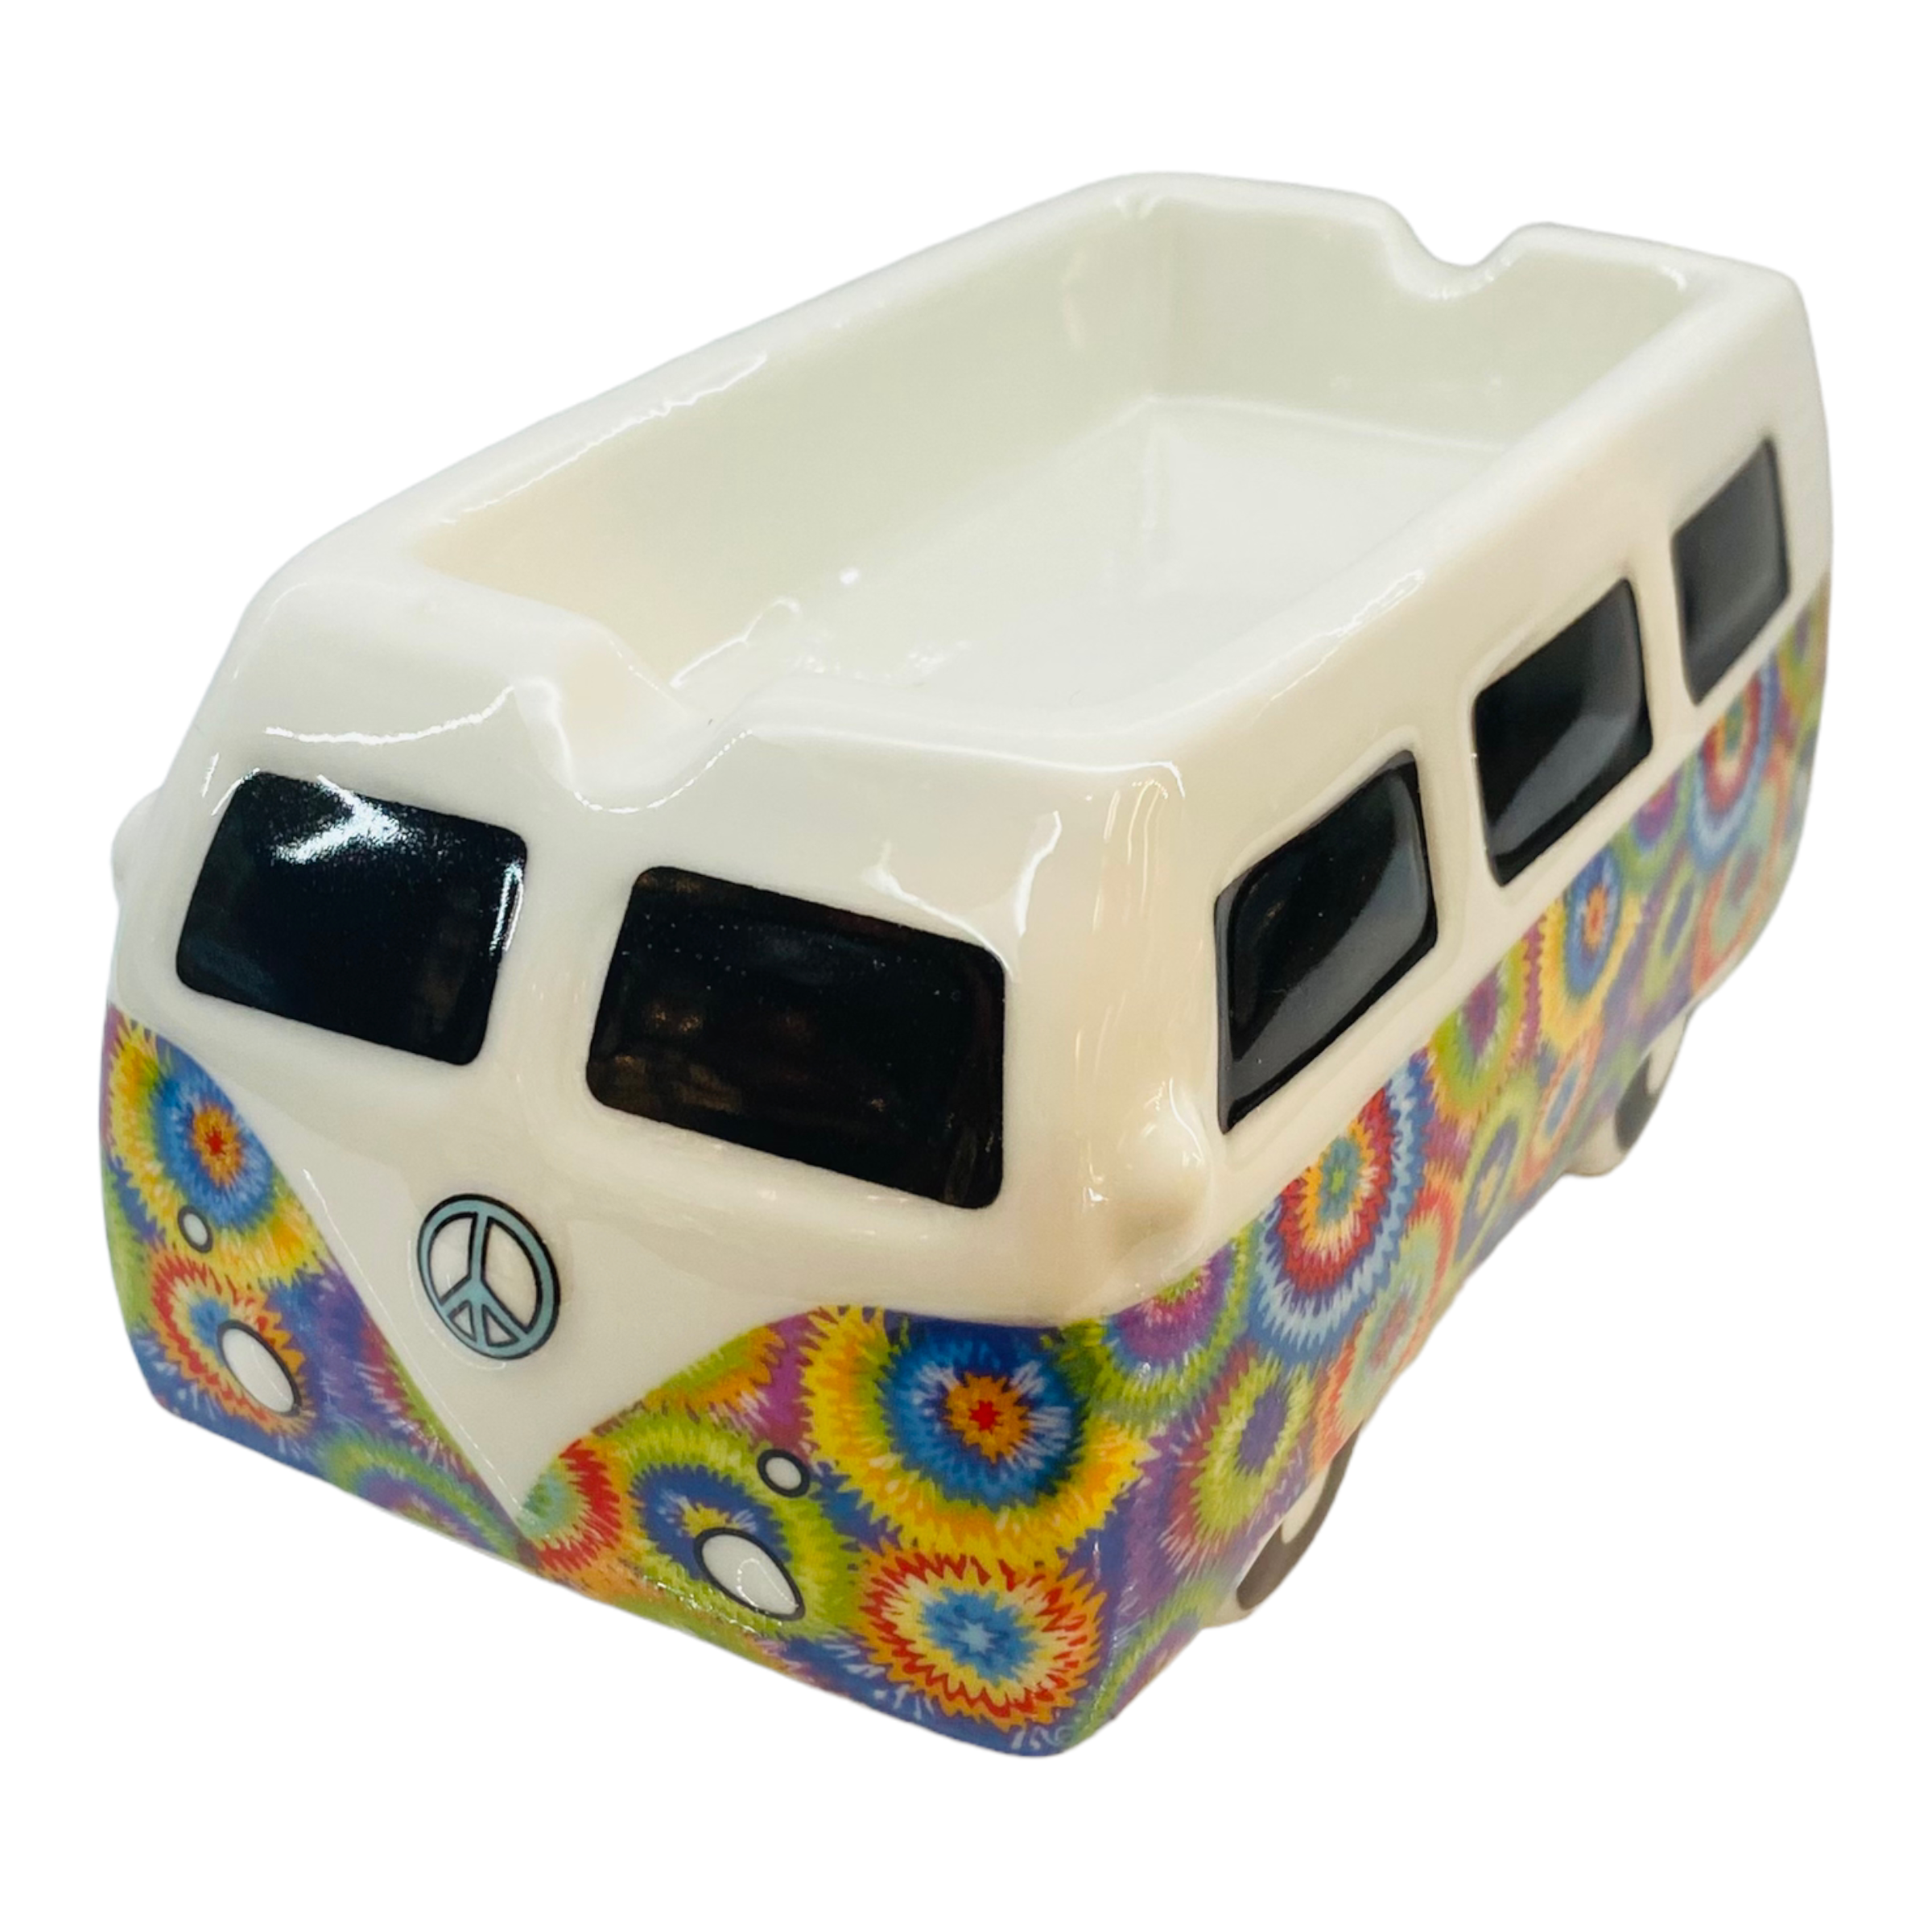 Vintage Hippie Bus Ceramic Ashtray Tie Dye - Rainbow Tie Dye